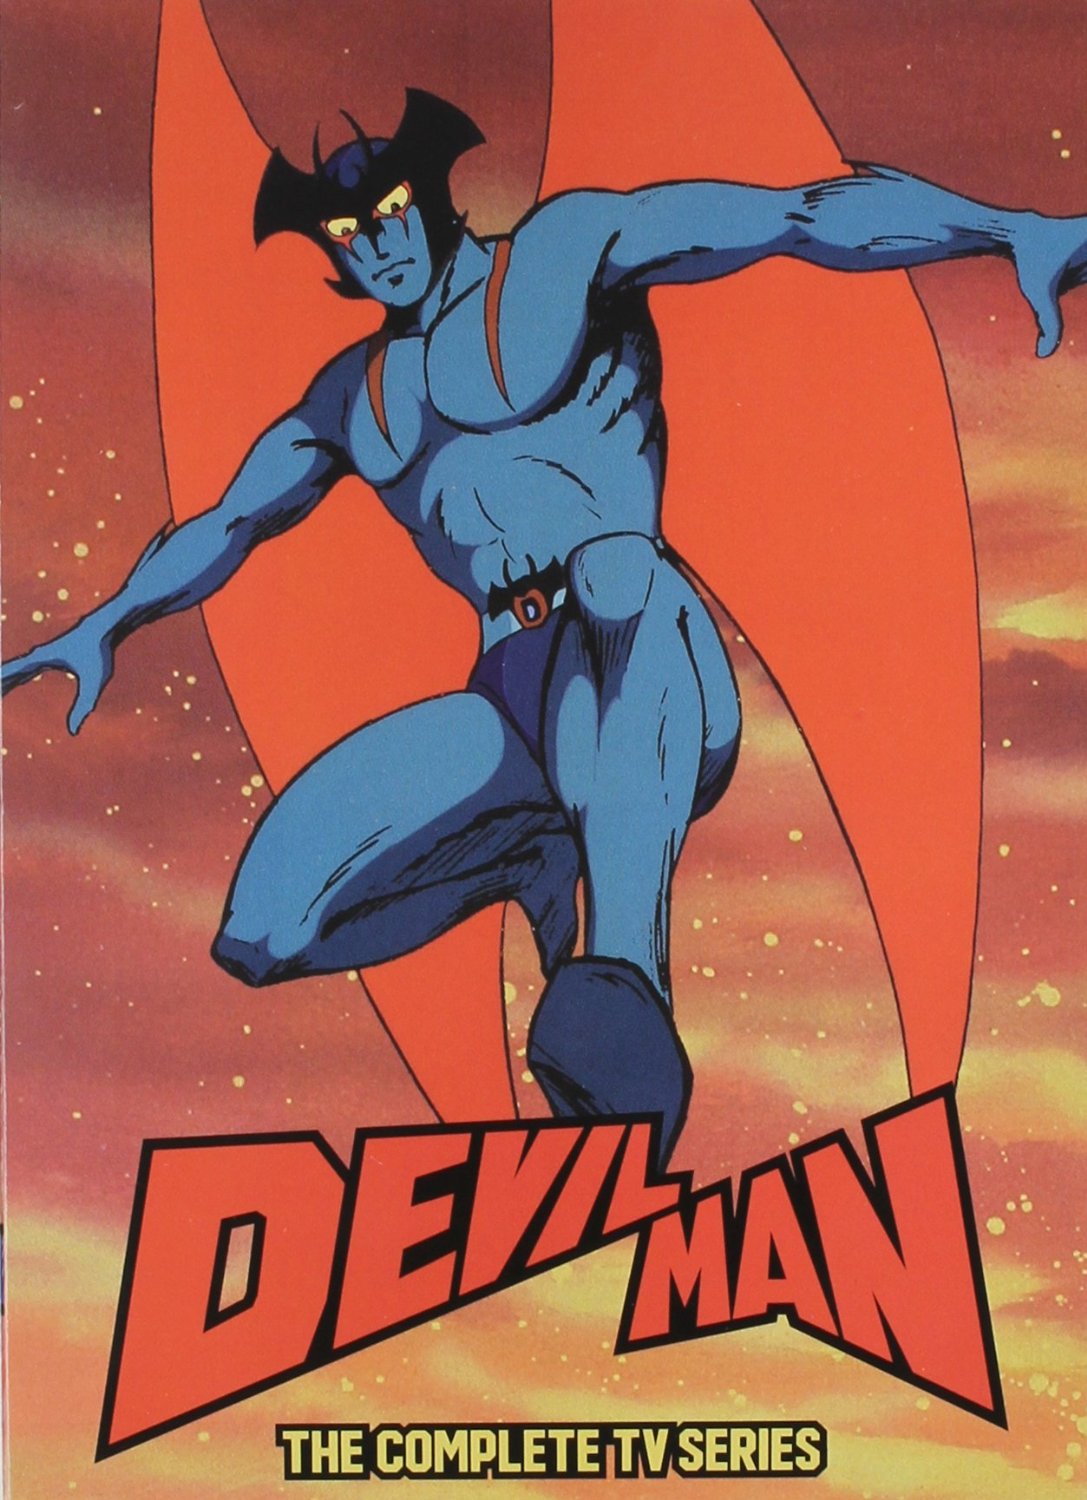 Devilman (1972) vs. Devilman Crybaby: Which Is Better?